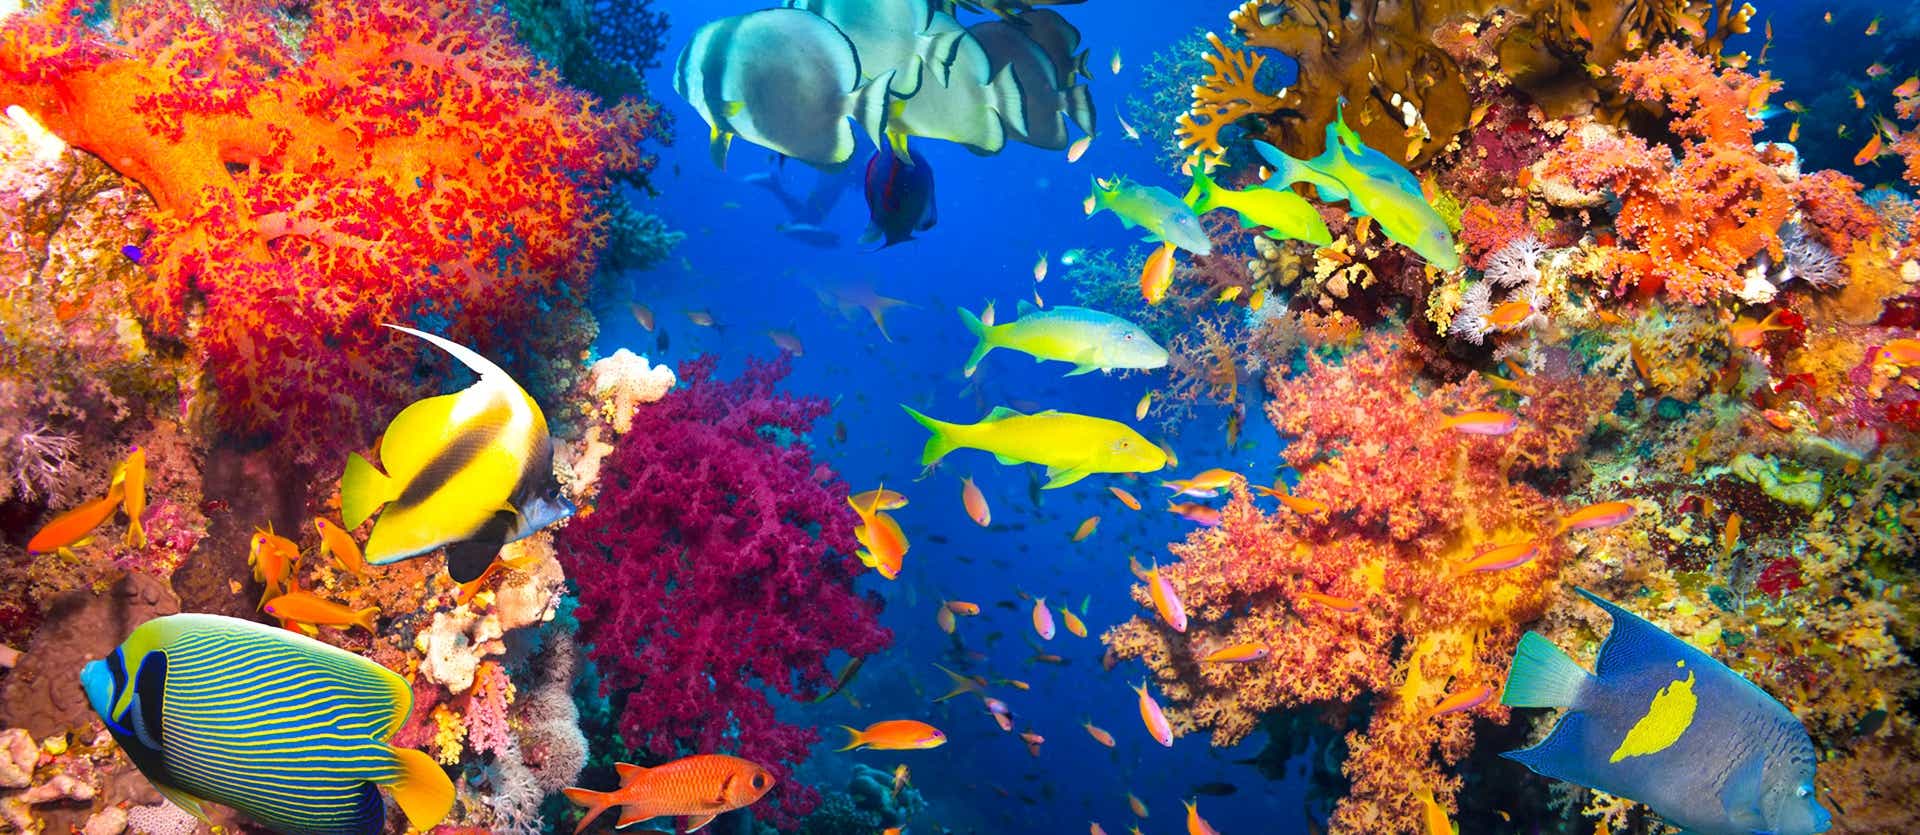 Coral Reef & Tropical Fish <span class="iconos separador"></span> Punta Cana